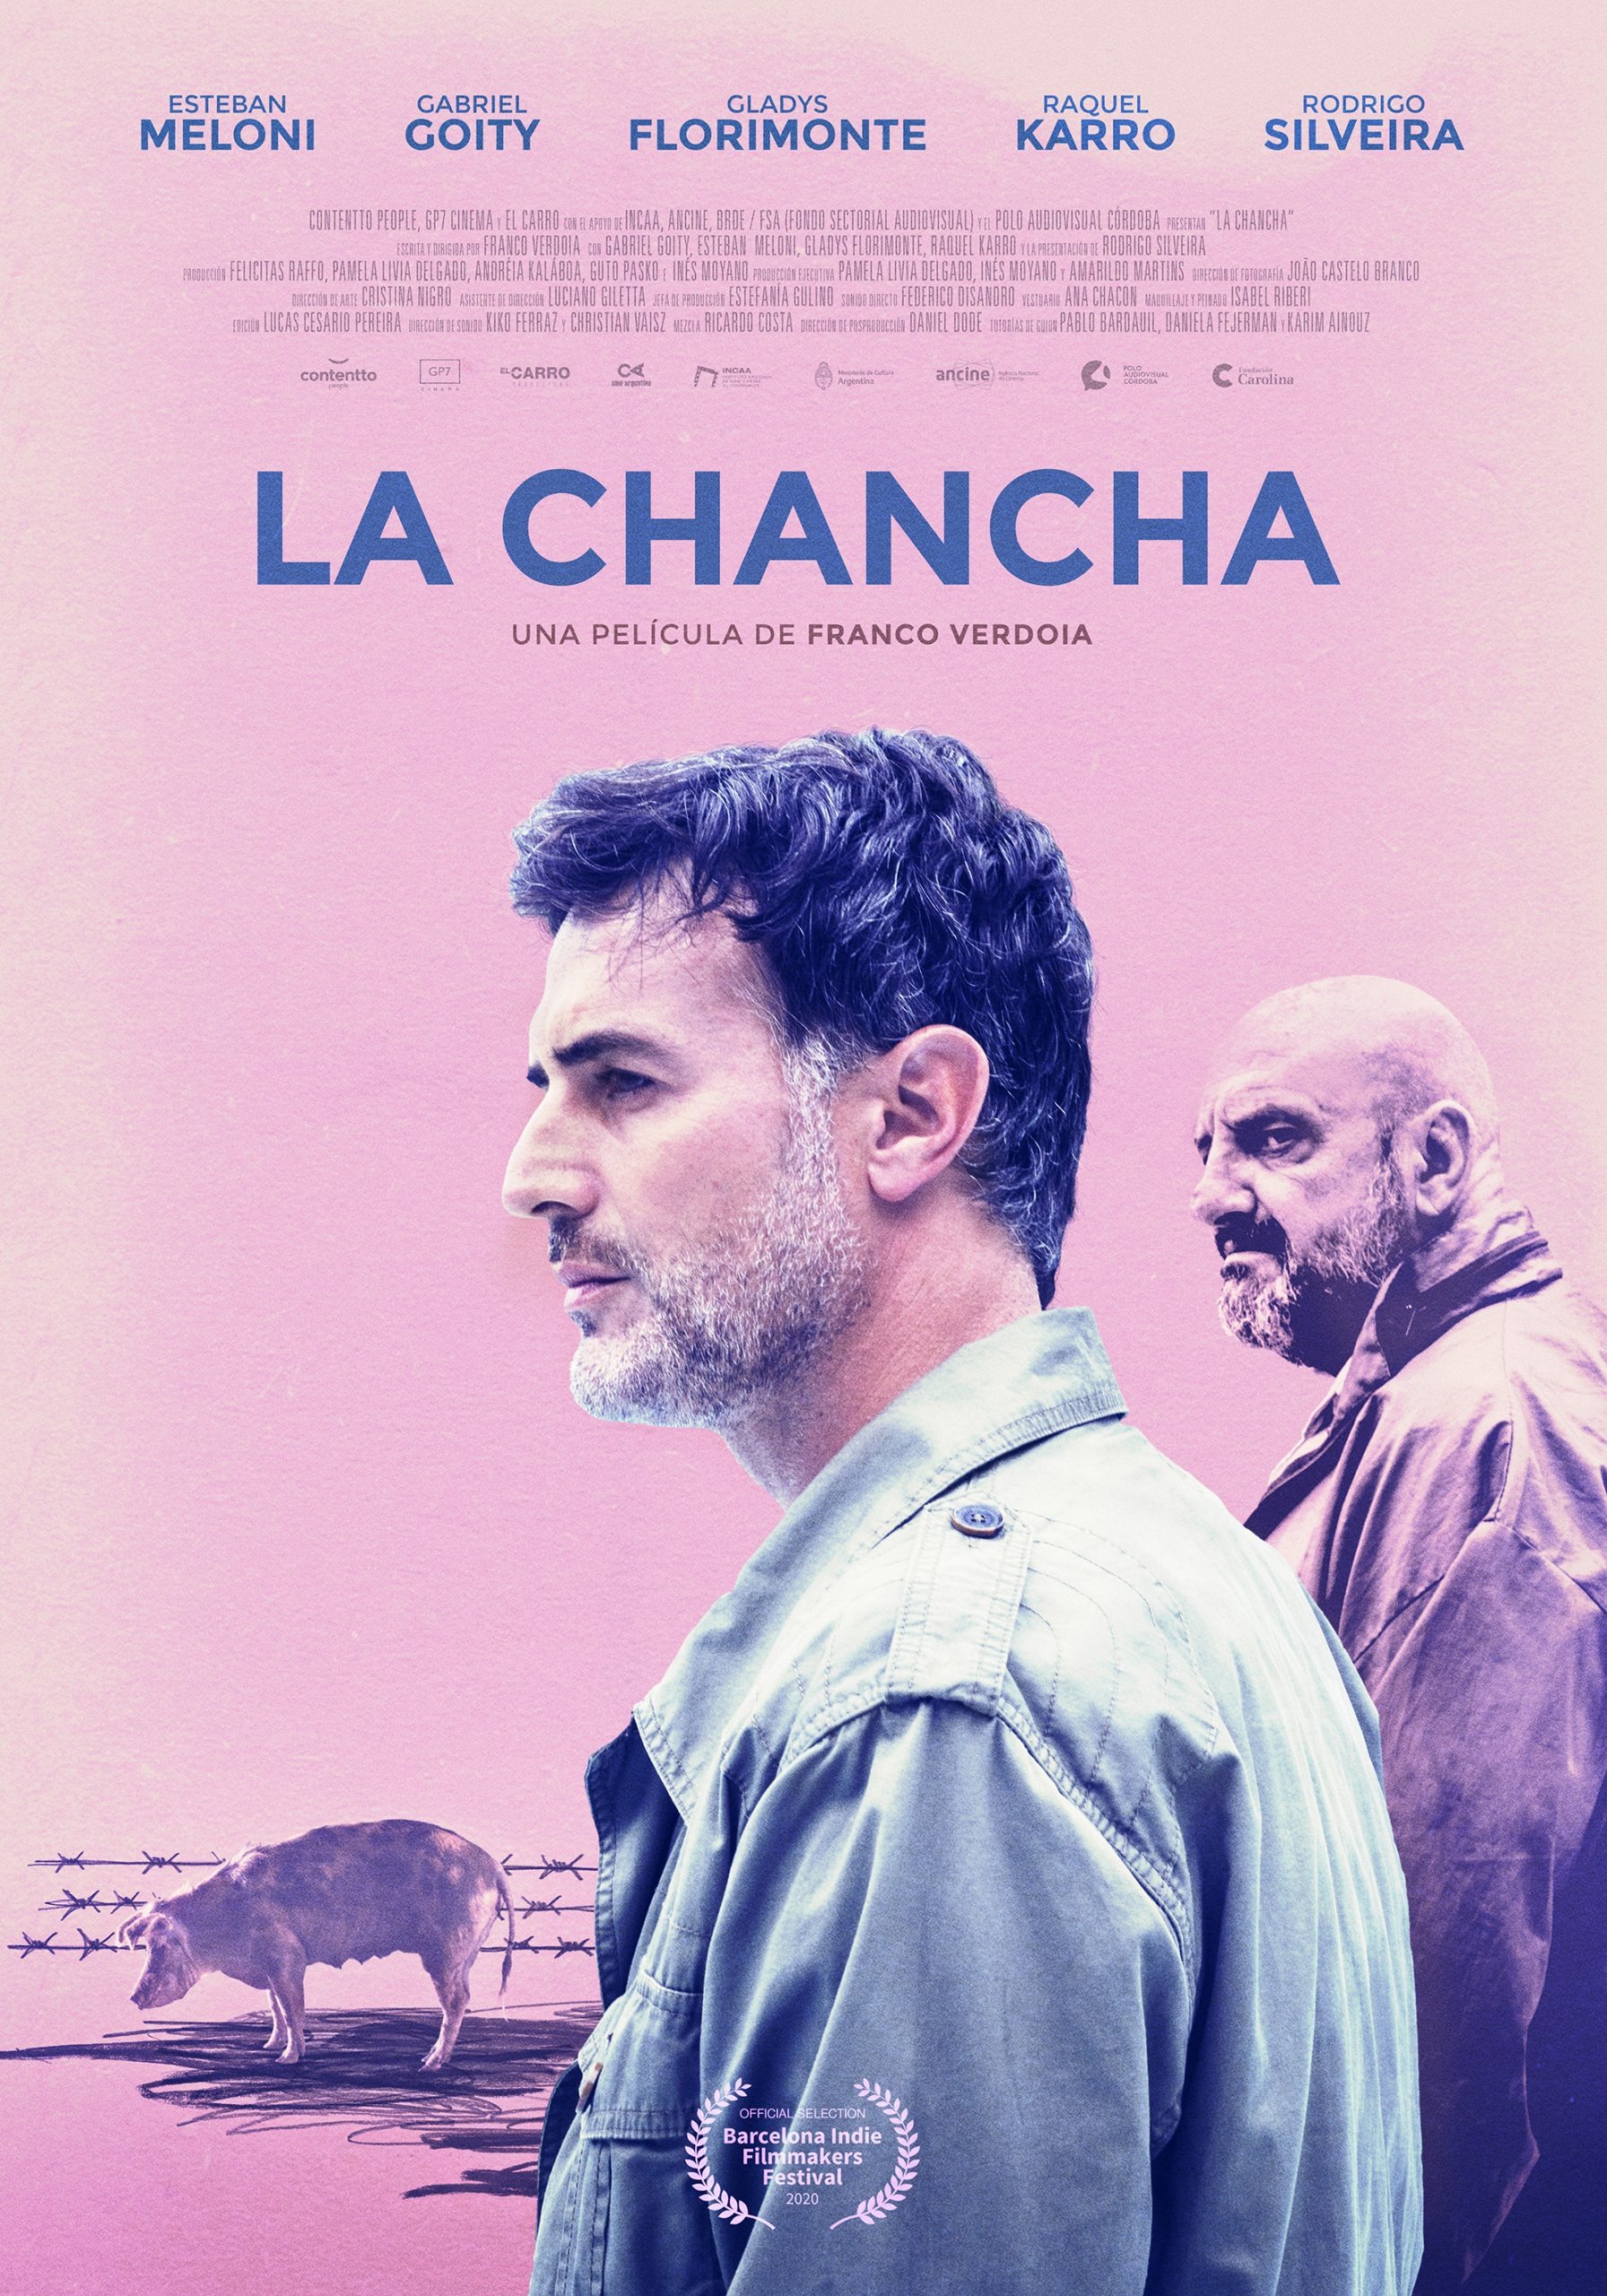 Mega Sized Movie Poster Image for La chancha (#1 of 2)